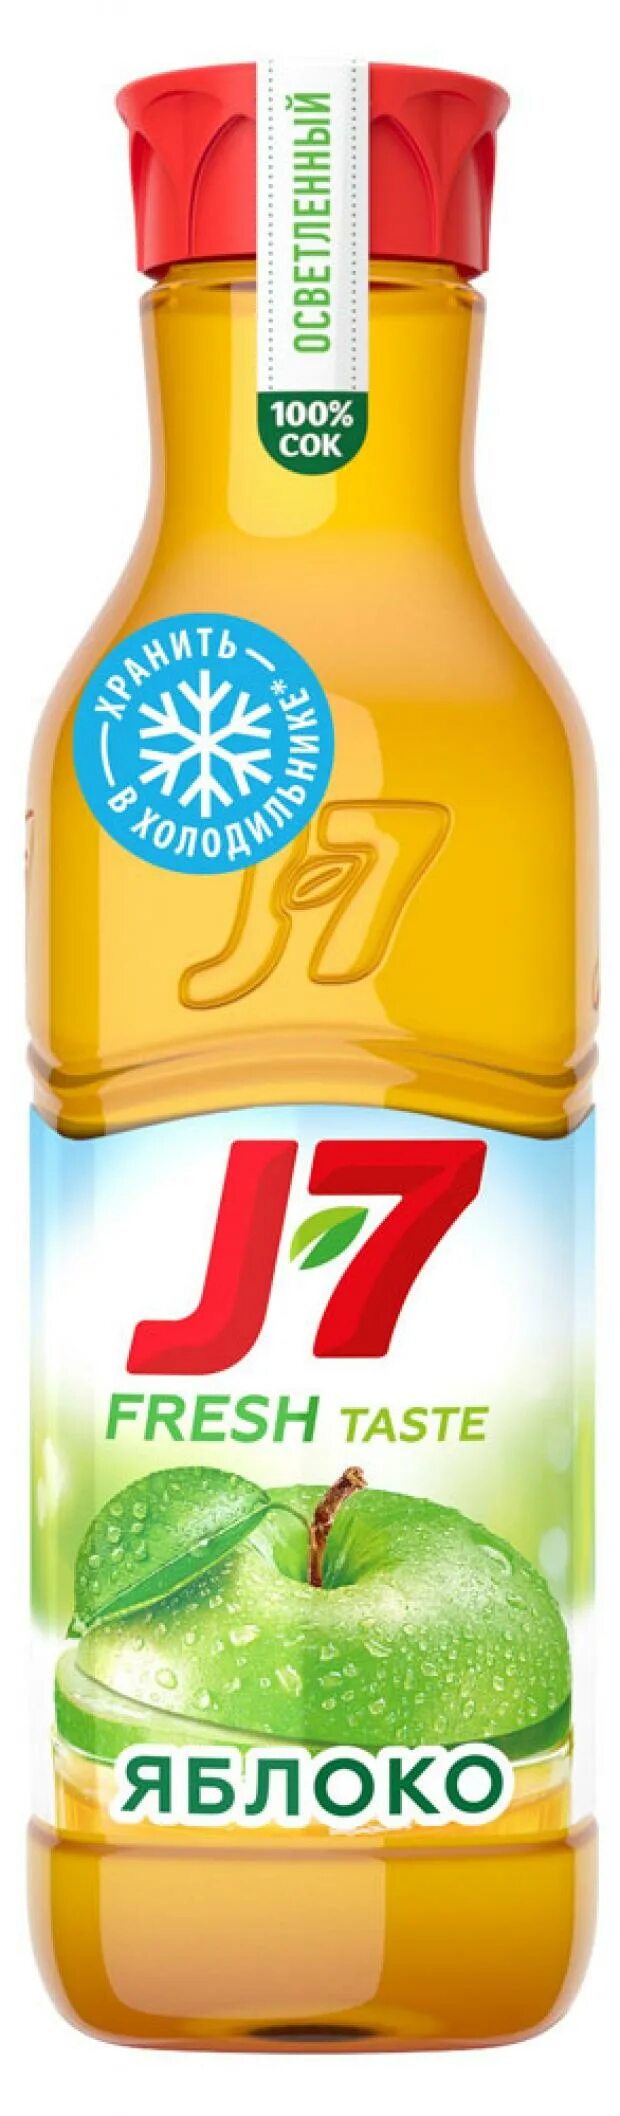 J7 fresh. Сок j7 Fresh taste апельсин. J7 Fresh taste яблоко. J7 Fresh taste сок апельсин с мякотью. Сок j7 яблоко персик.